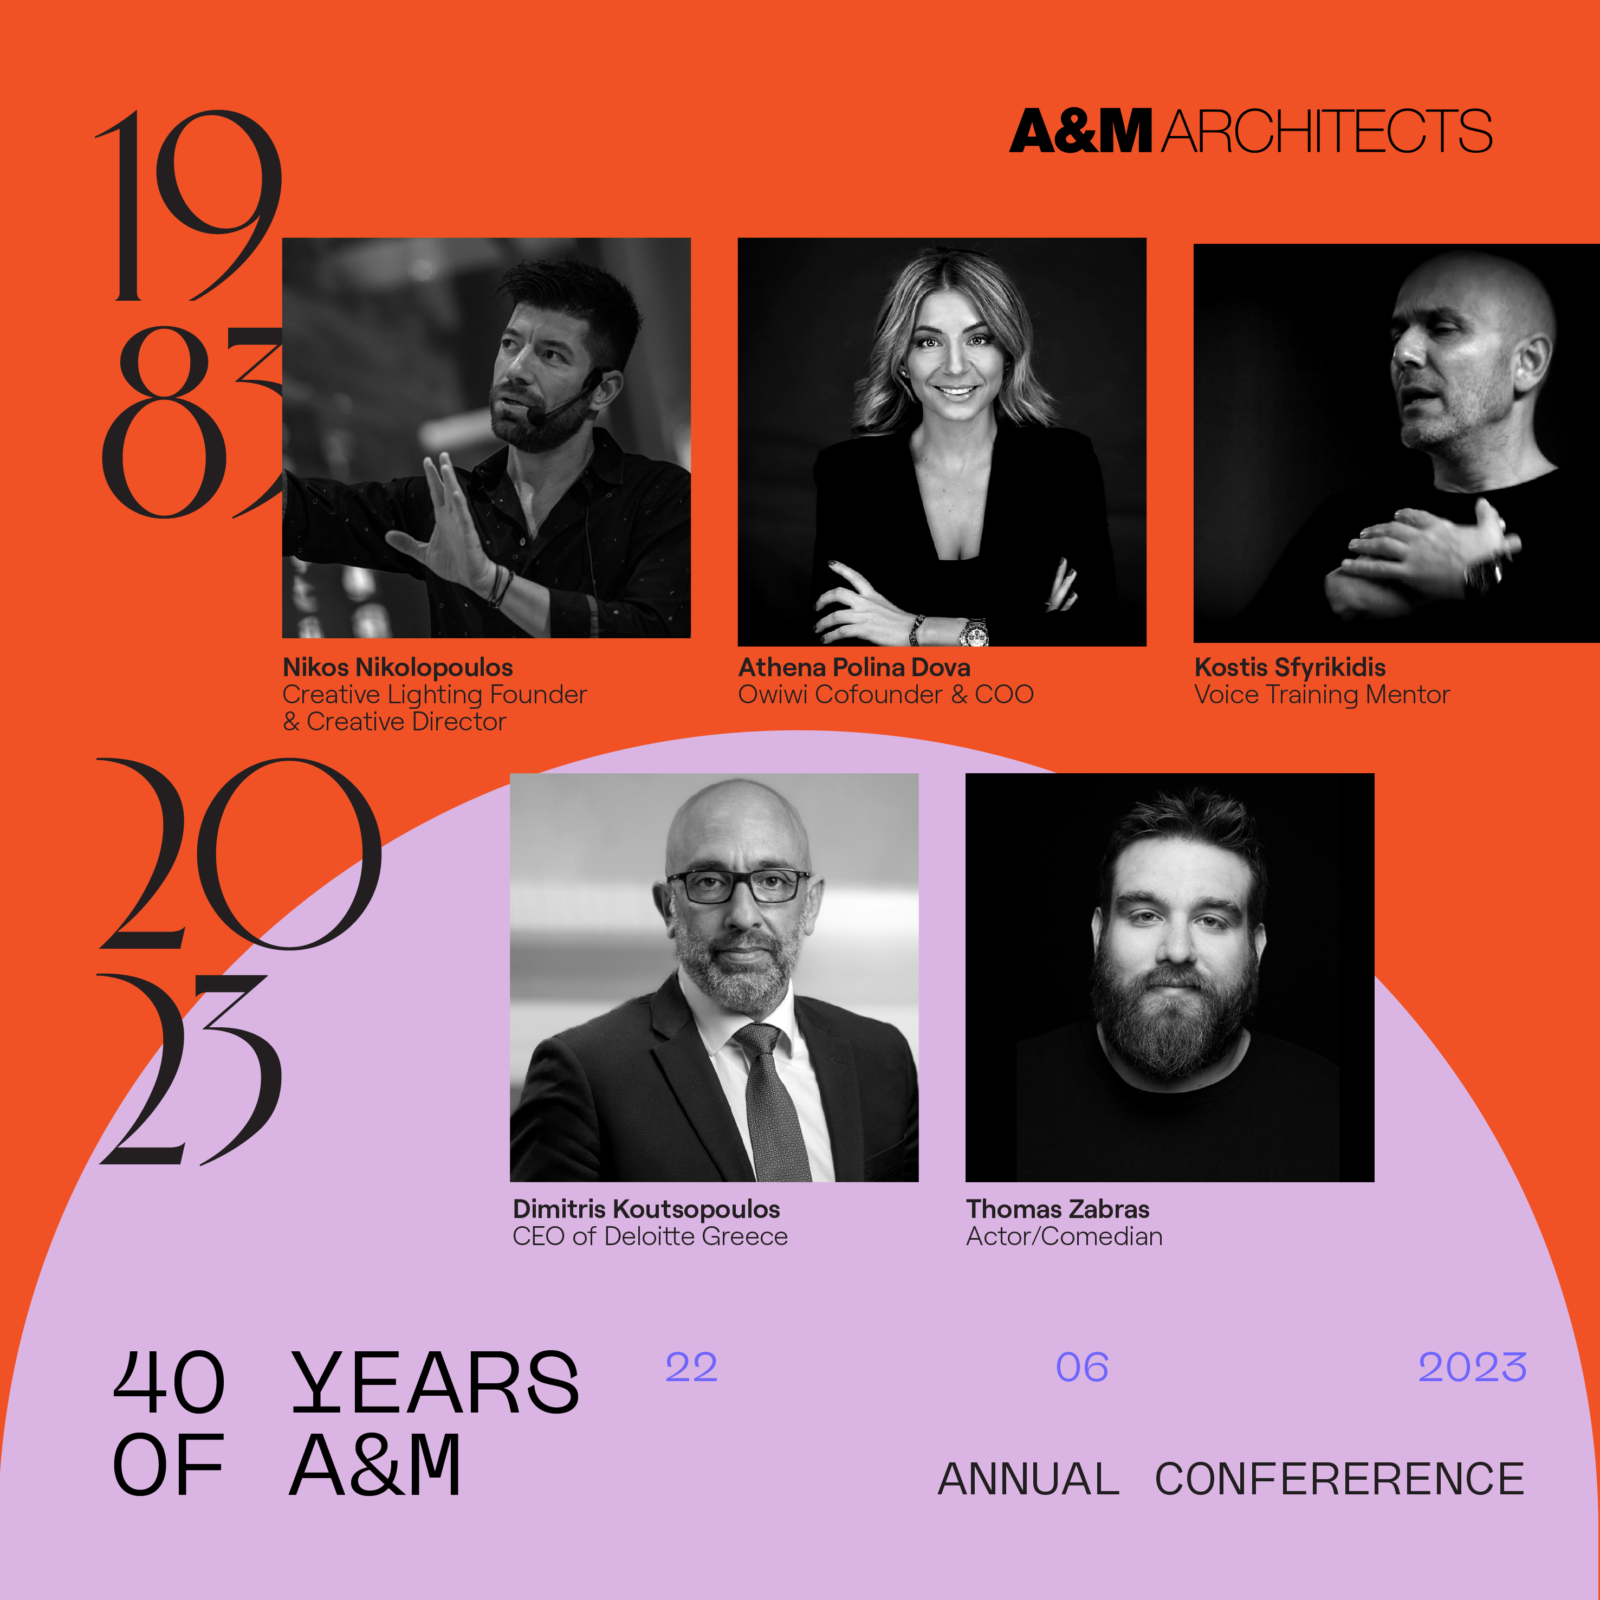 Archisearch 40 YEARS OF A&M ARCHITECTS // Η A&M Architects ανακοινώνει ένα εντυπωσιακό line up ομιλιών σε ζωντανή μετάδοση για την επετειακή της ημερίδα γιορτάζοντας 40 χρόνια αρχιτεκτονικής πορείας